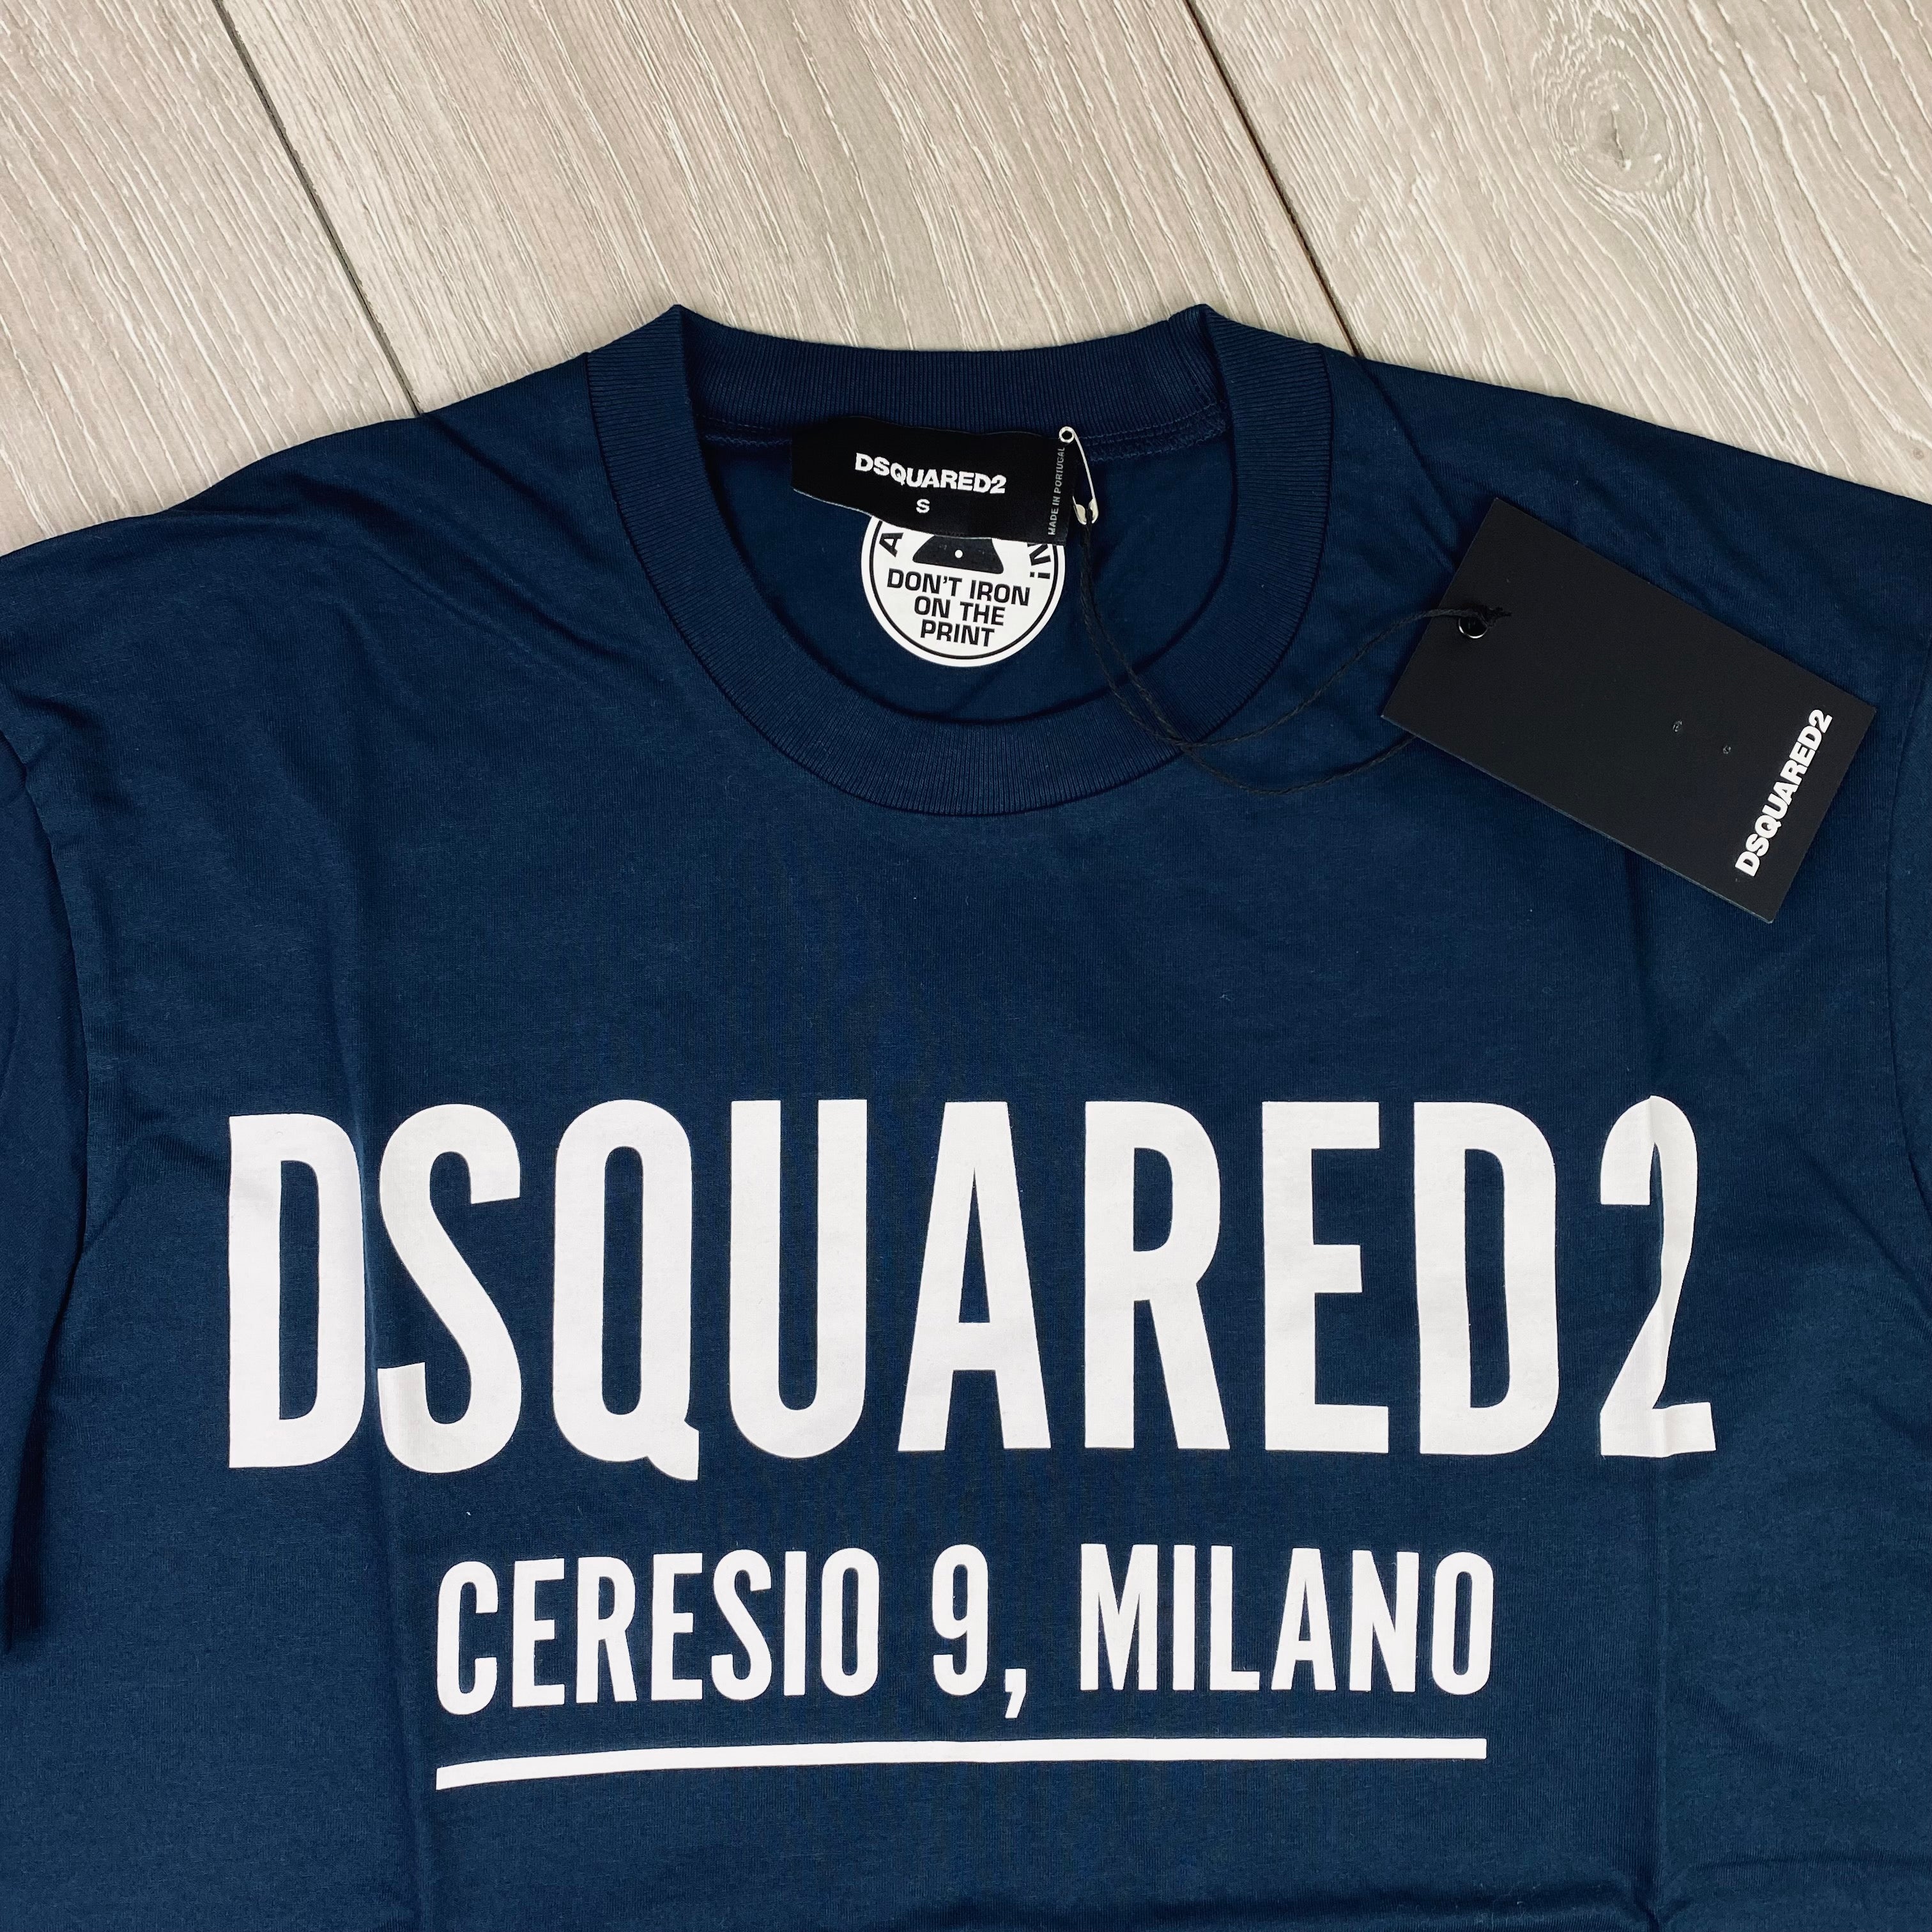 DSQUARED2 Ceresio T-Shirt